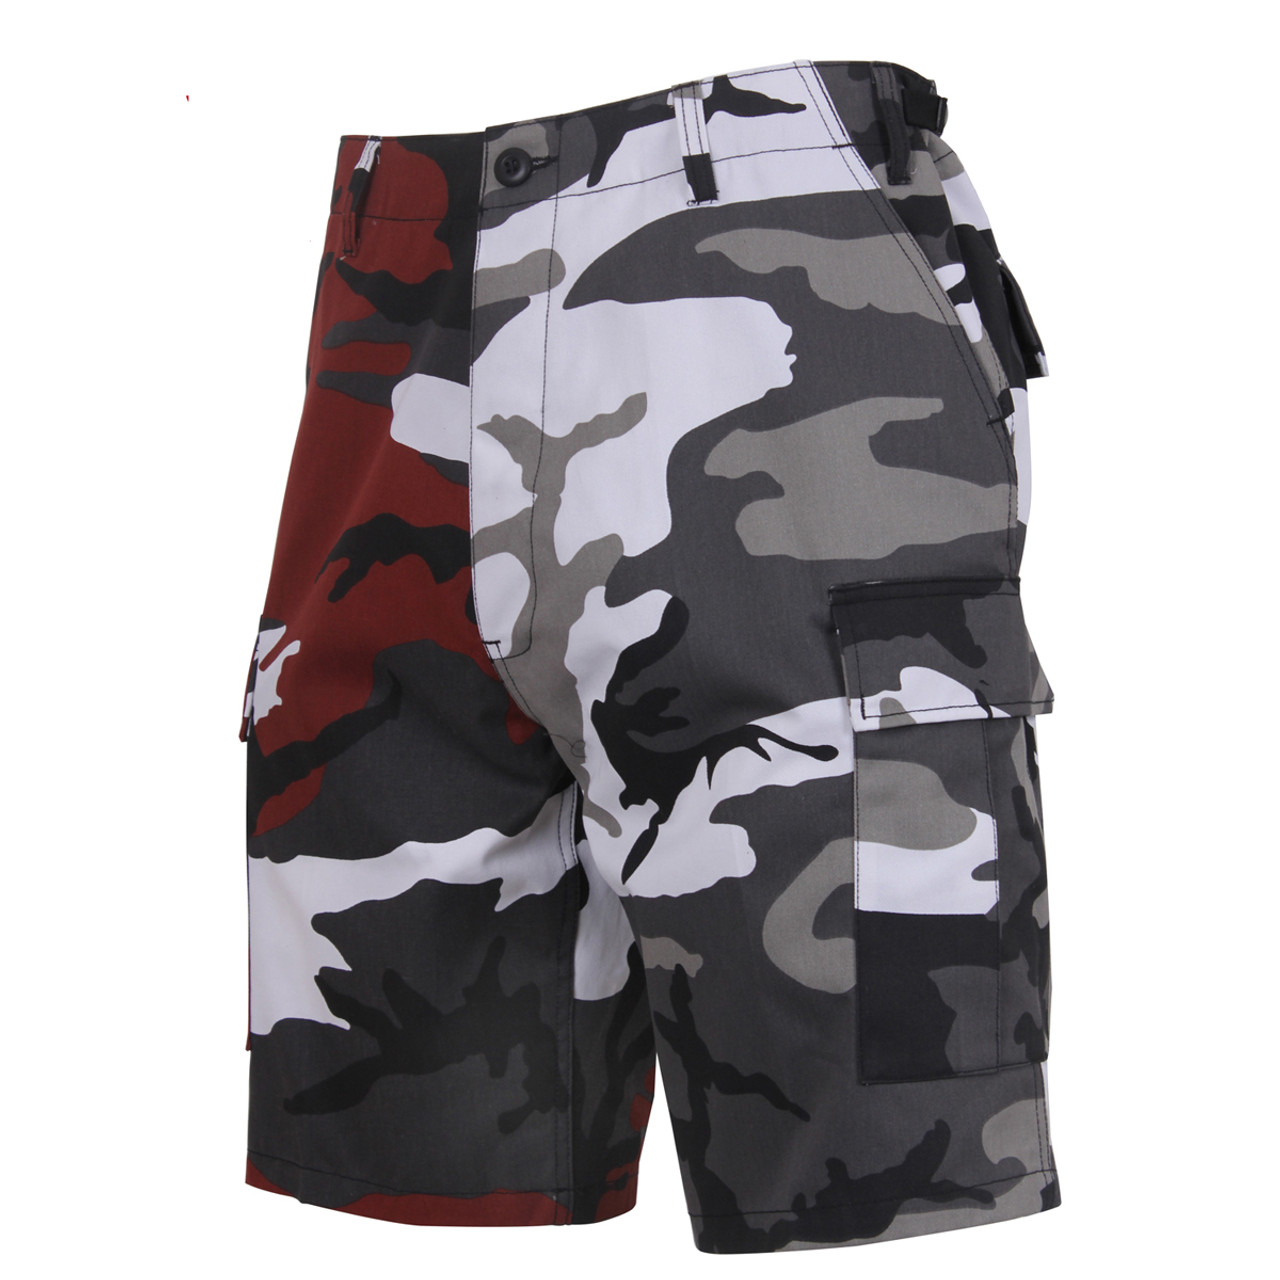 Shop Rothco Two/Tone Camo Shorts - Fatigues Army Navy